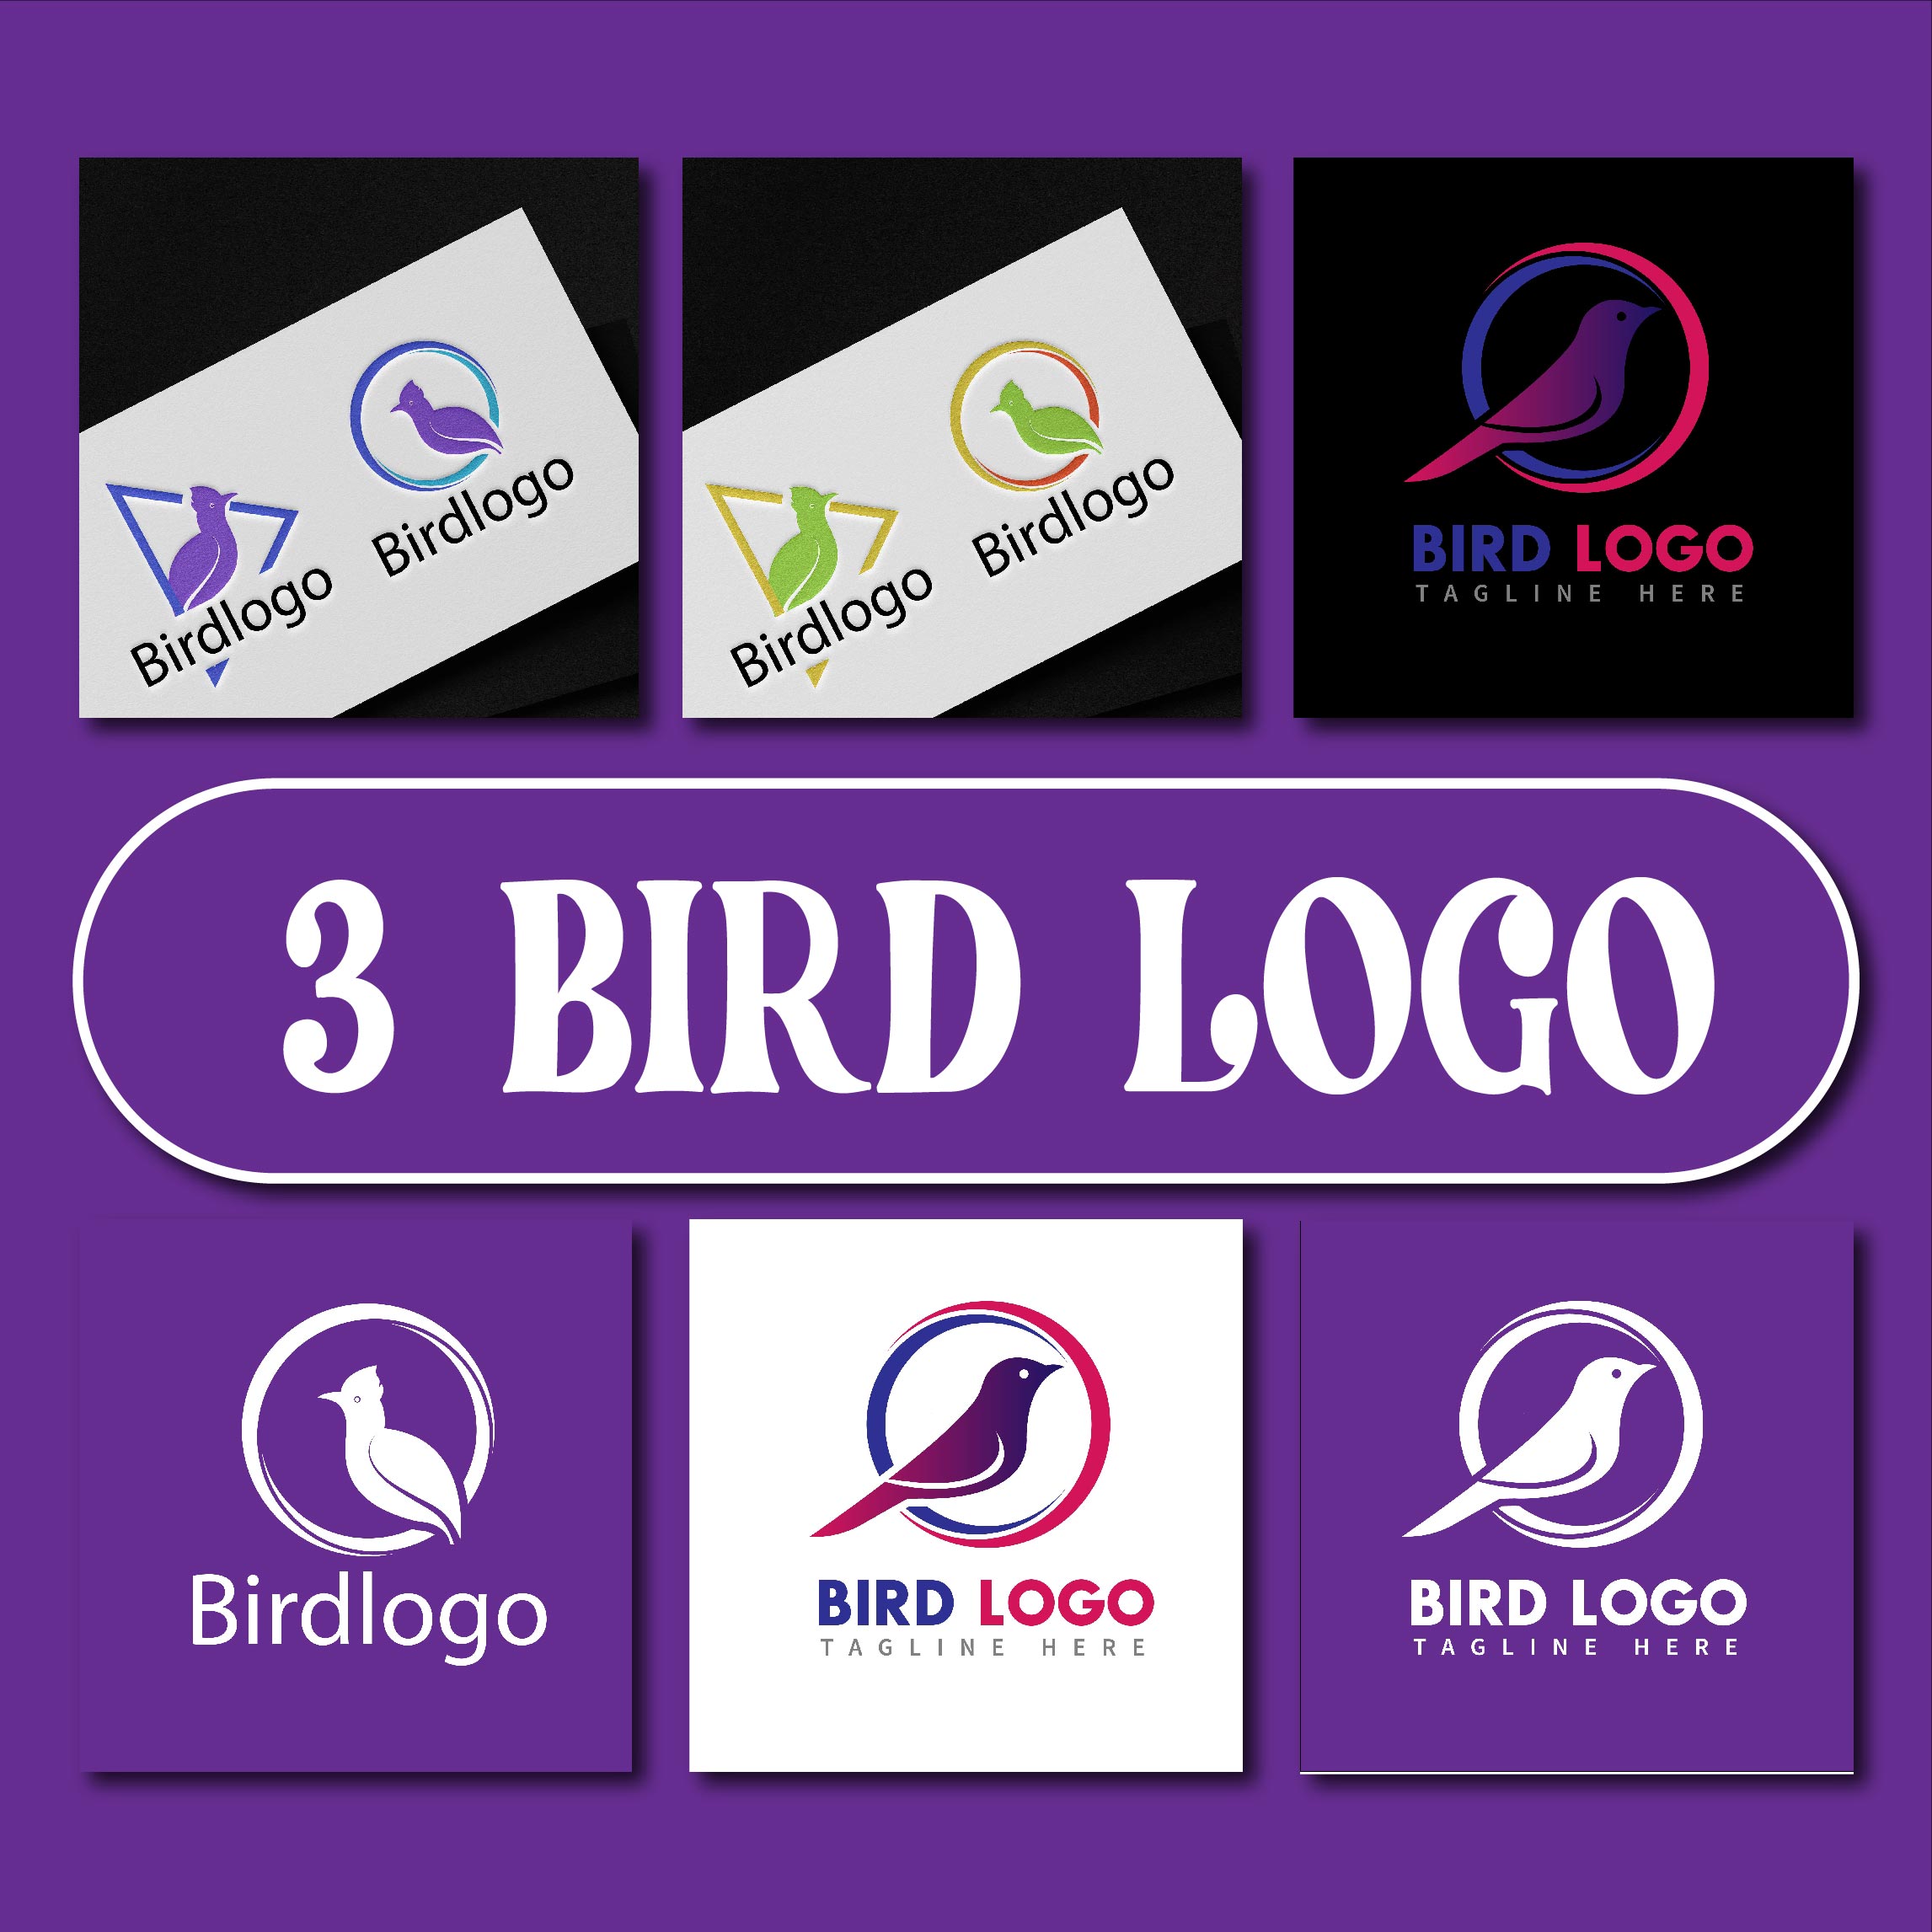 Bird Iconic Logo Design cover image.